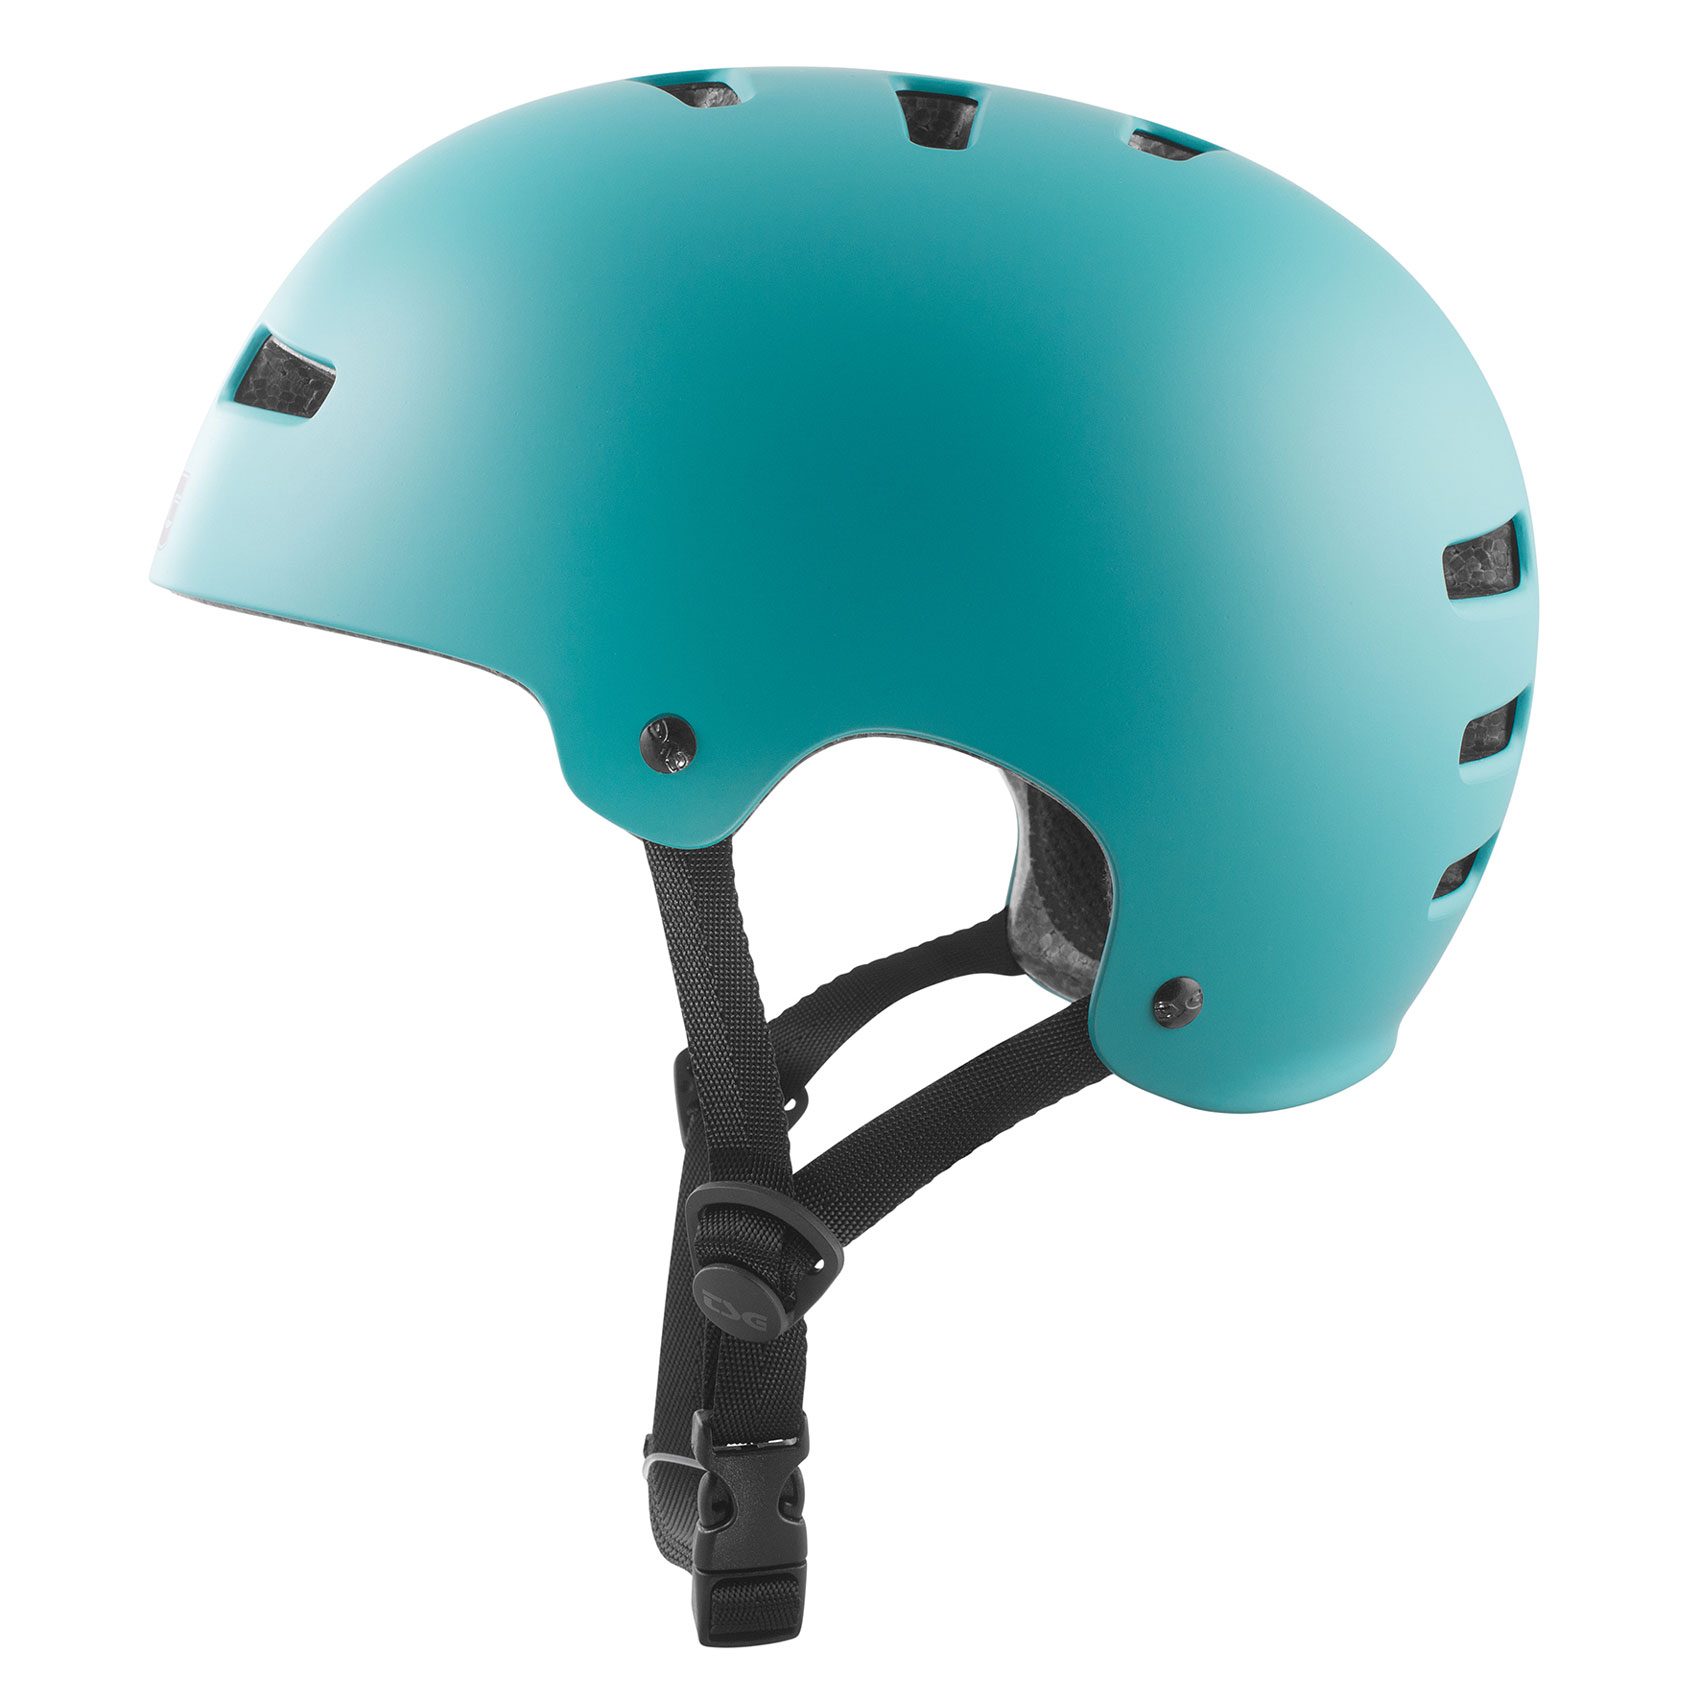 TSG Helm Evolution Solid Color (satin cauma green)